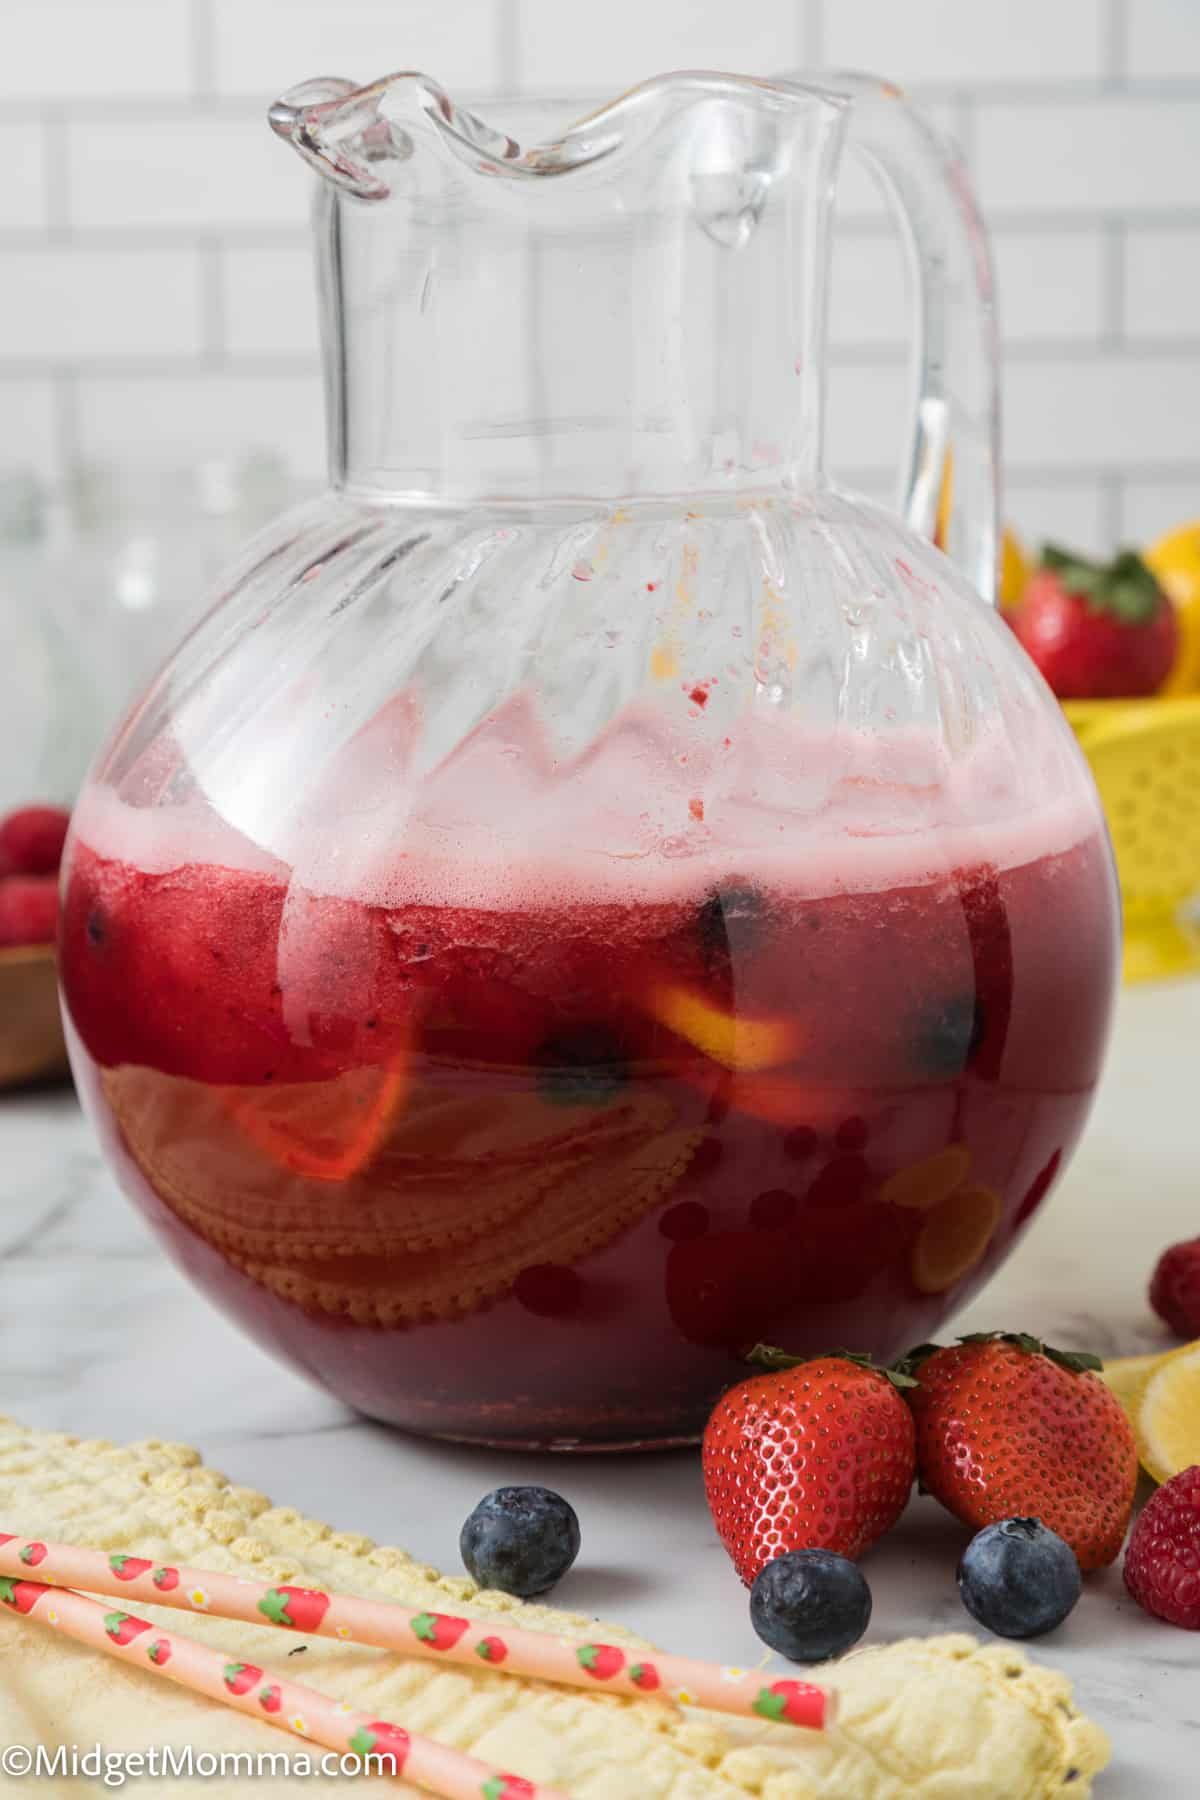 Pithcher of Refreshing Berry Lemonade Made with Strawberries, Blueberries & Blackberries